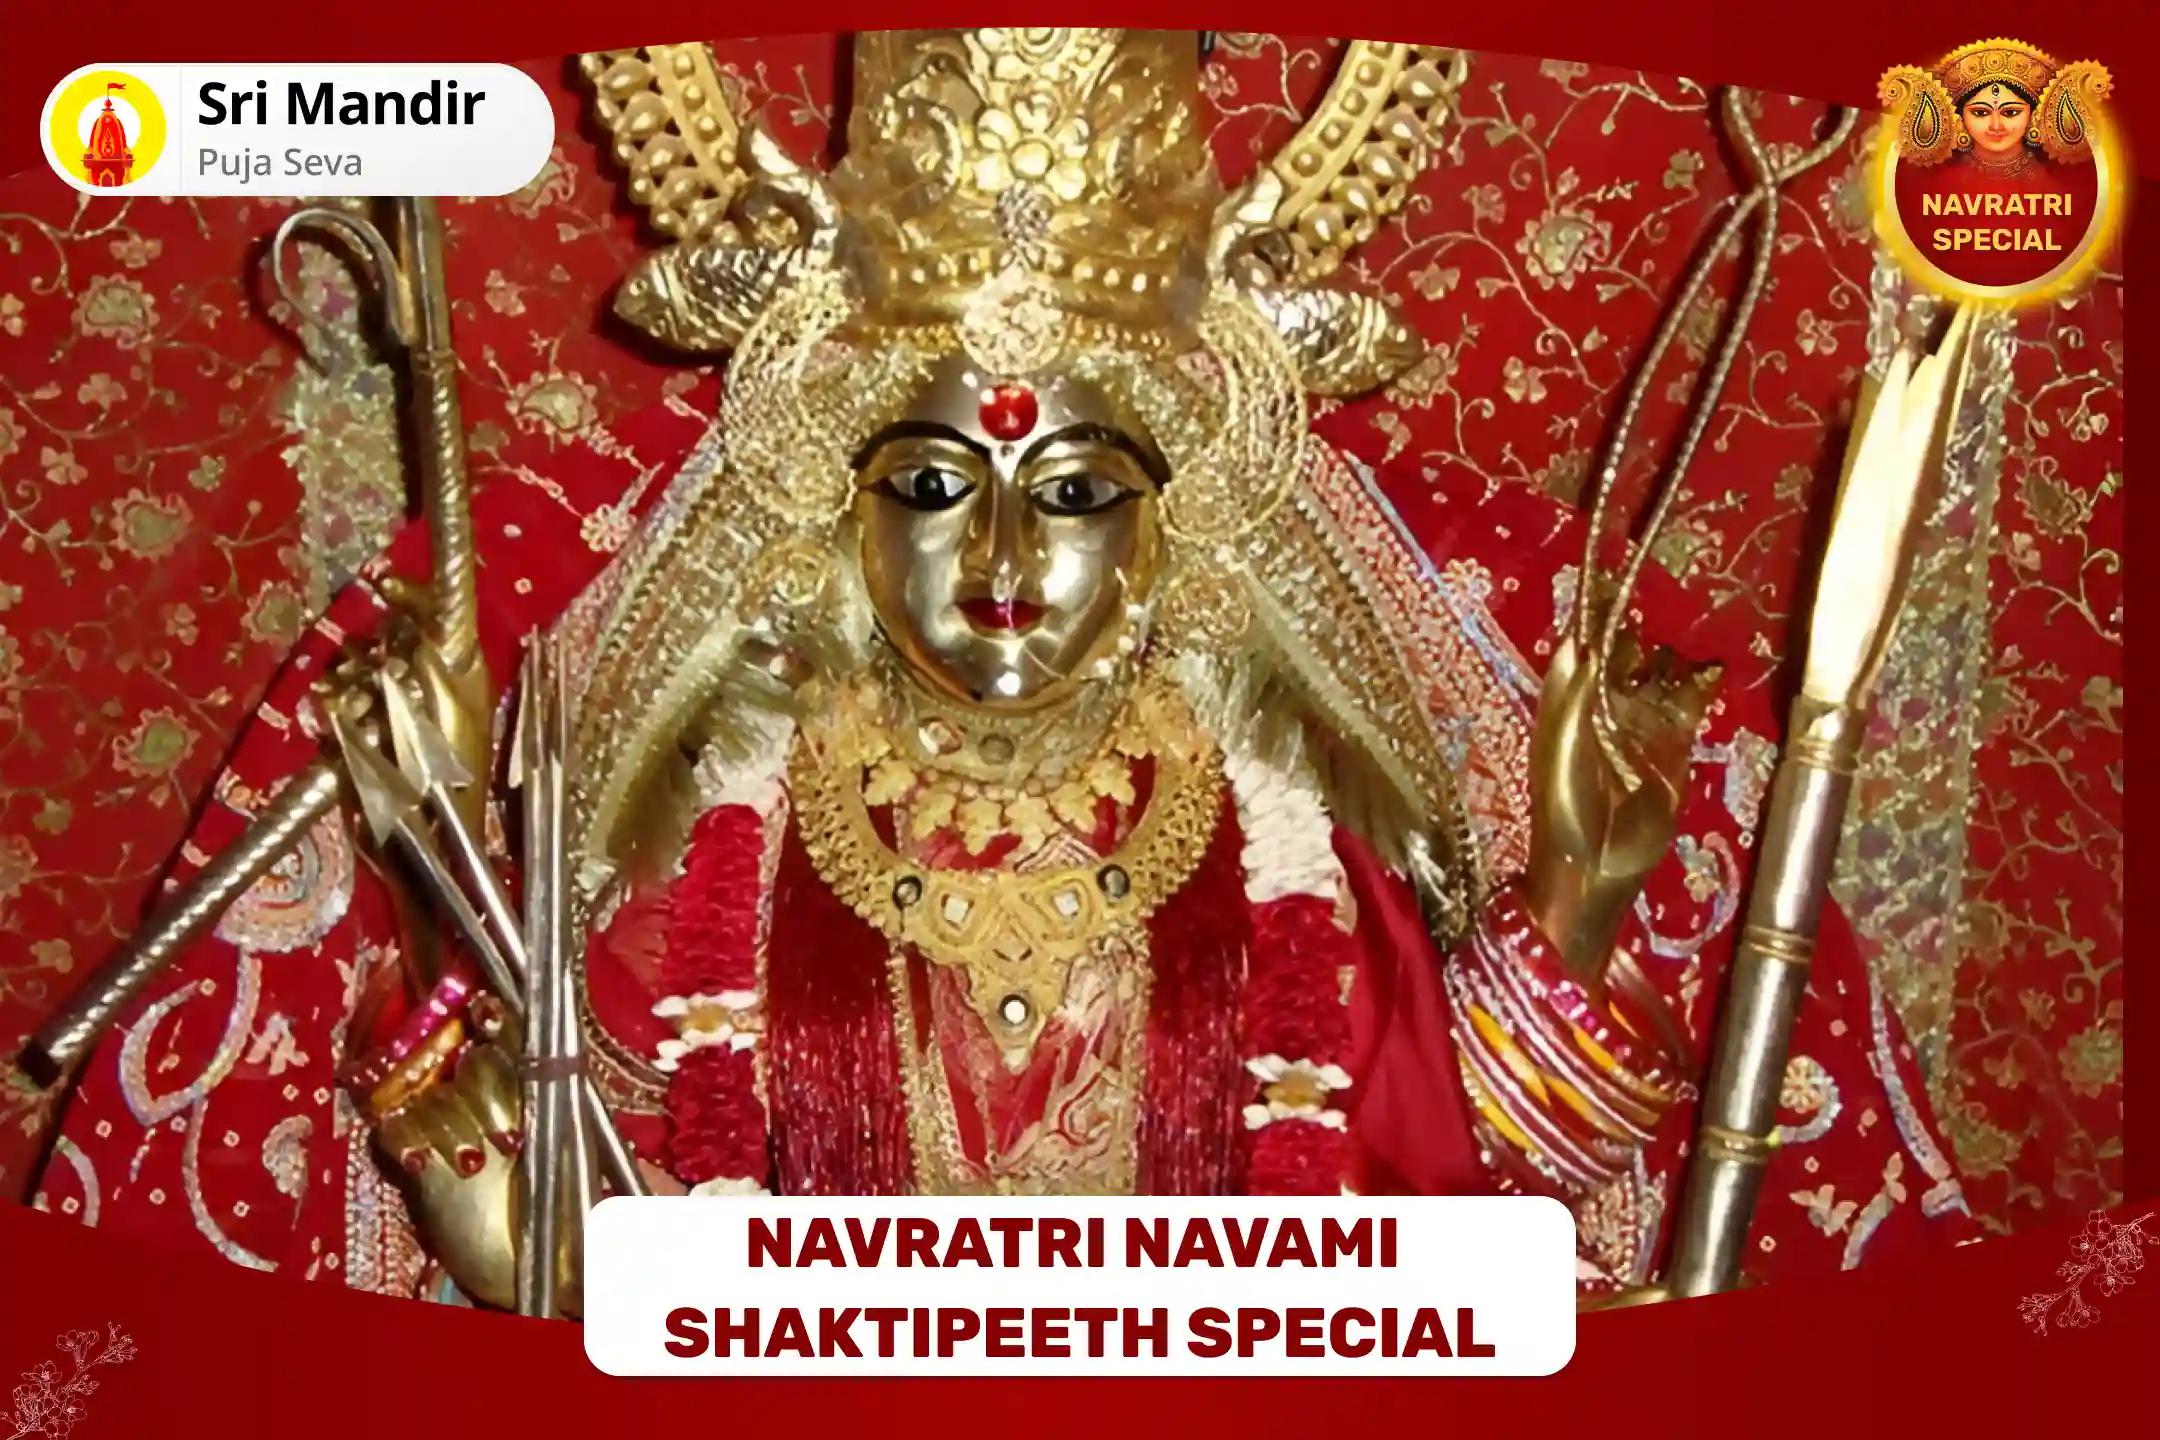 Navratri Navami Shaktipeeth Special Maa Katayayani Maha Yagya and Katyayani Ashtakam Path for Bliss in Relationship and Victory over Enemies